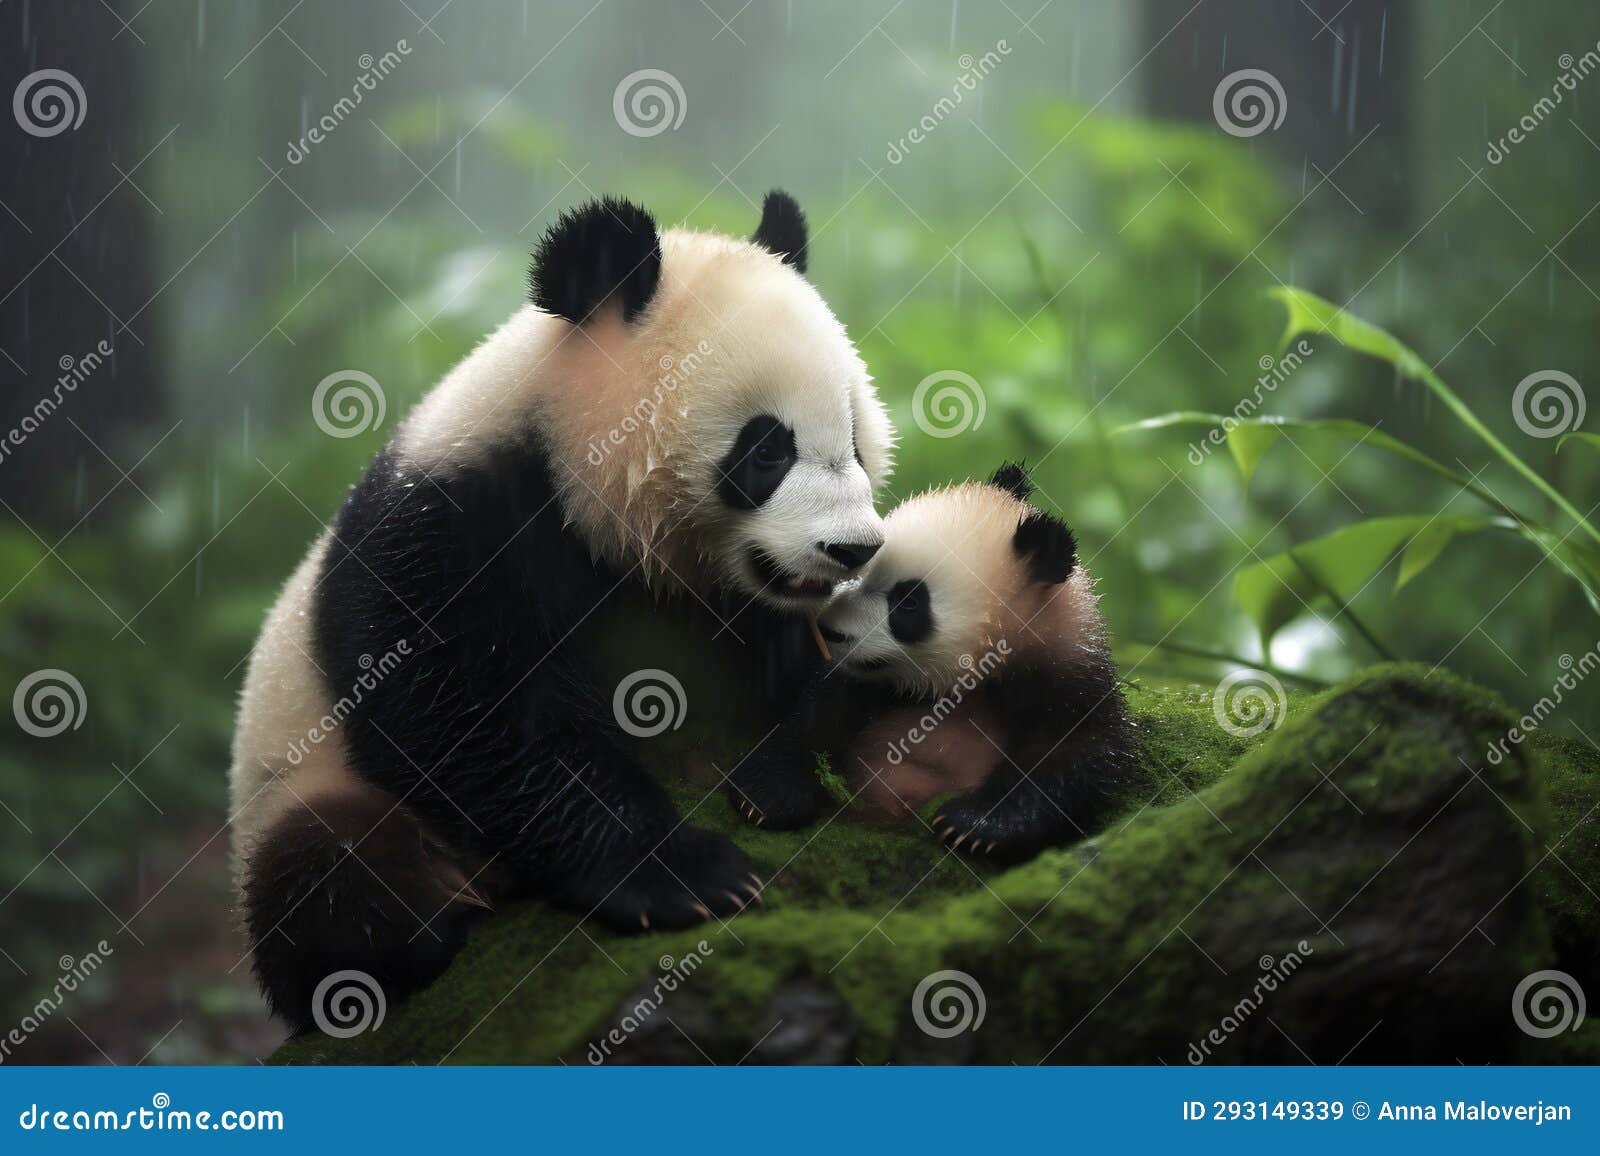 Kawaii Panda Images – Browse 18,459 Stock Photos, Vectors, and